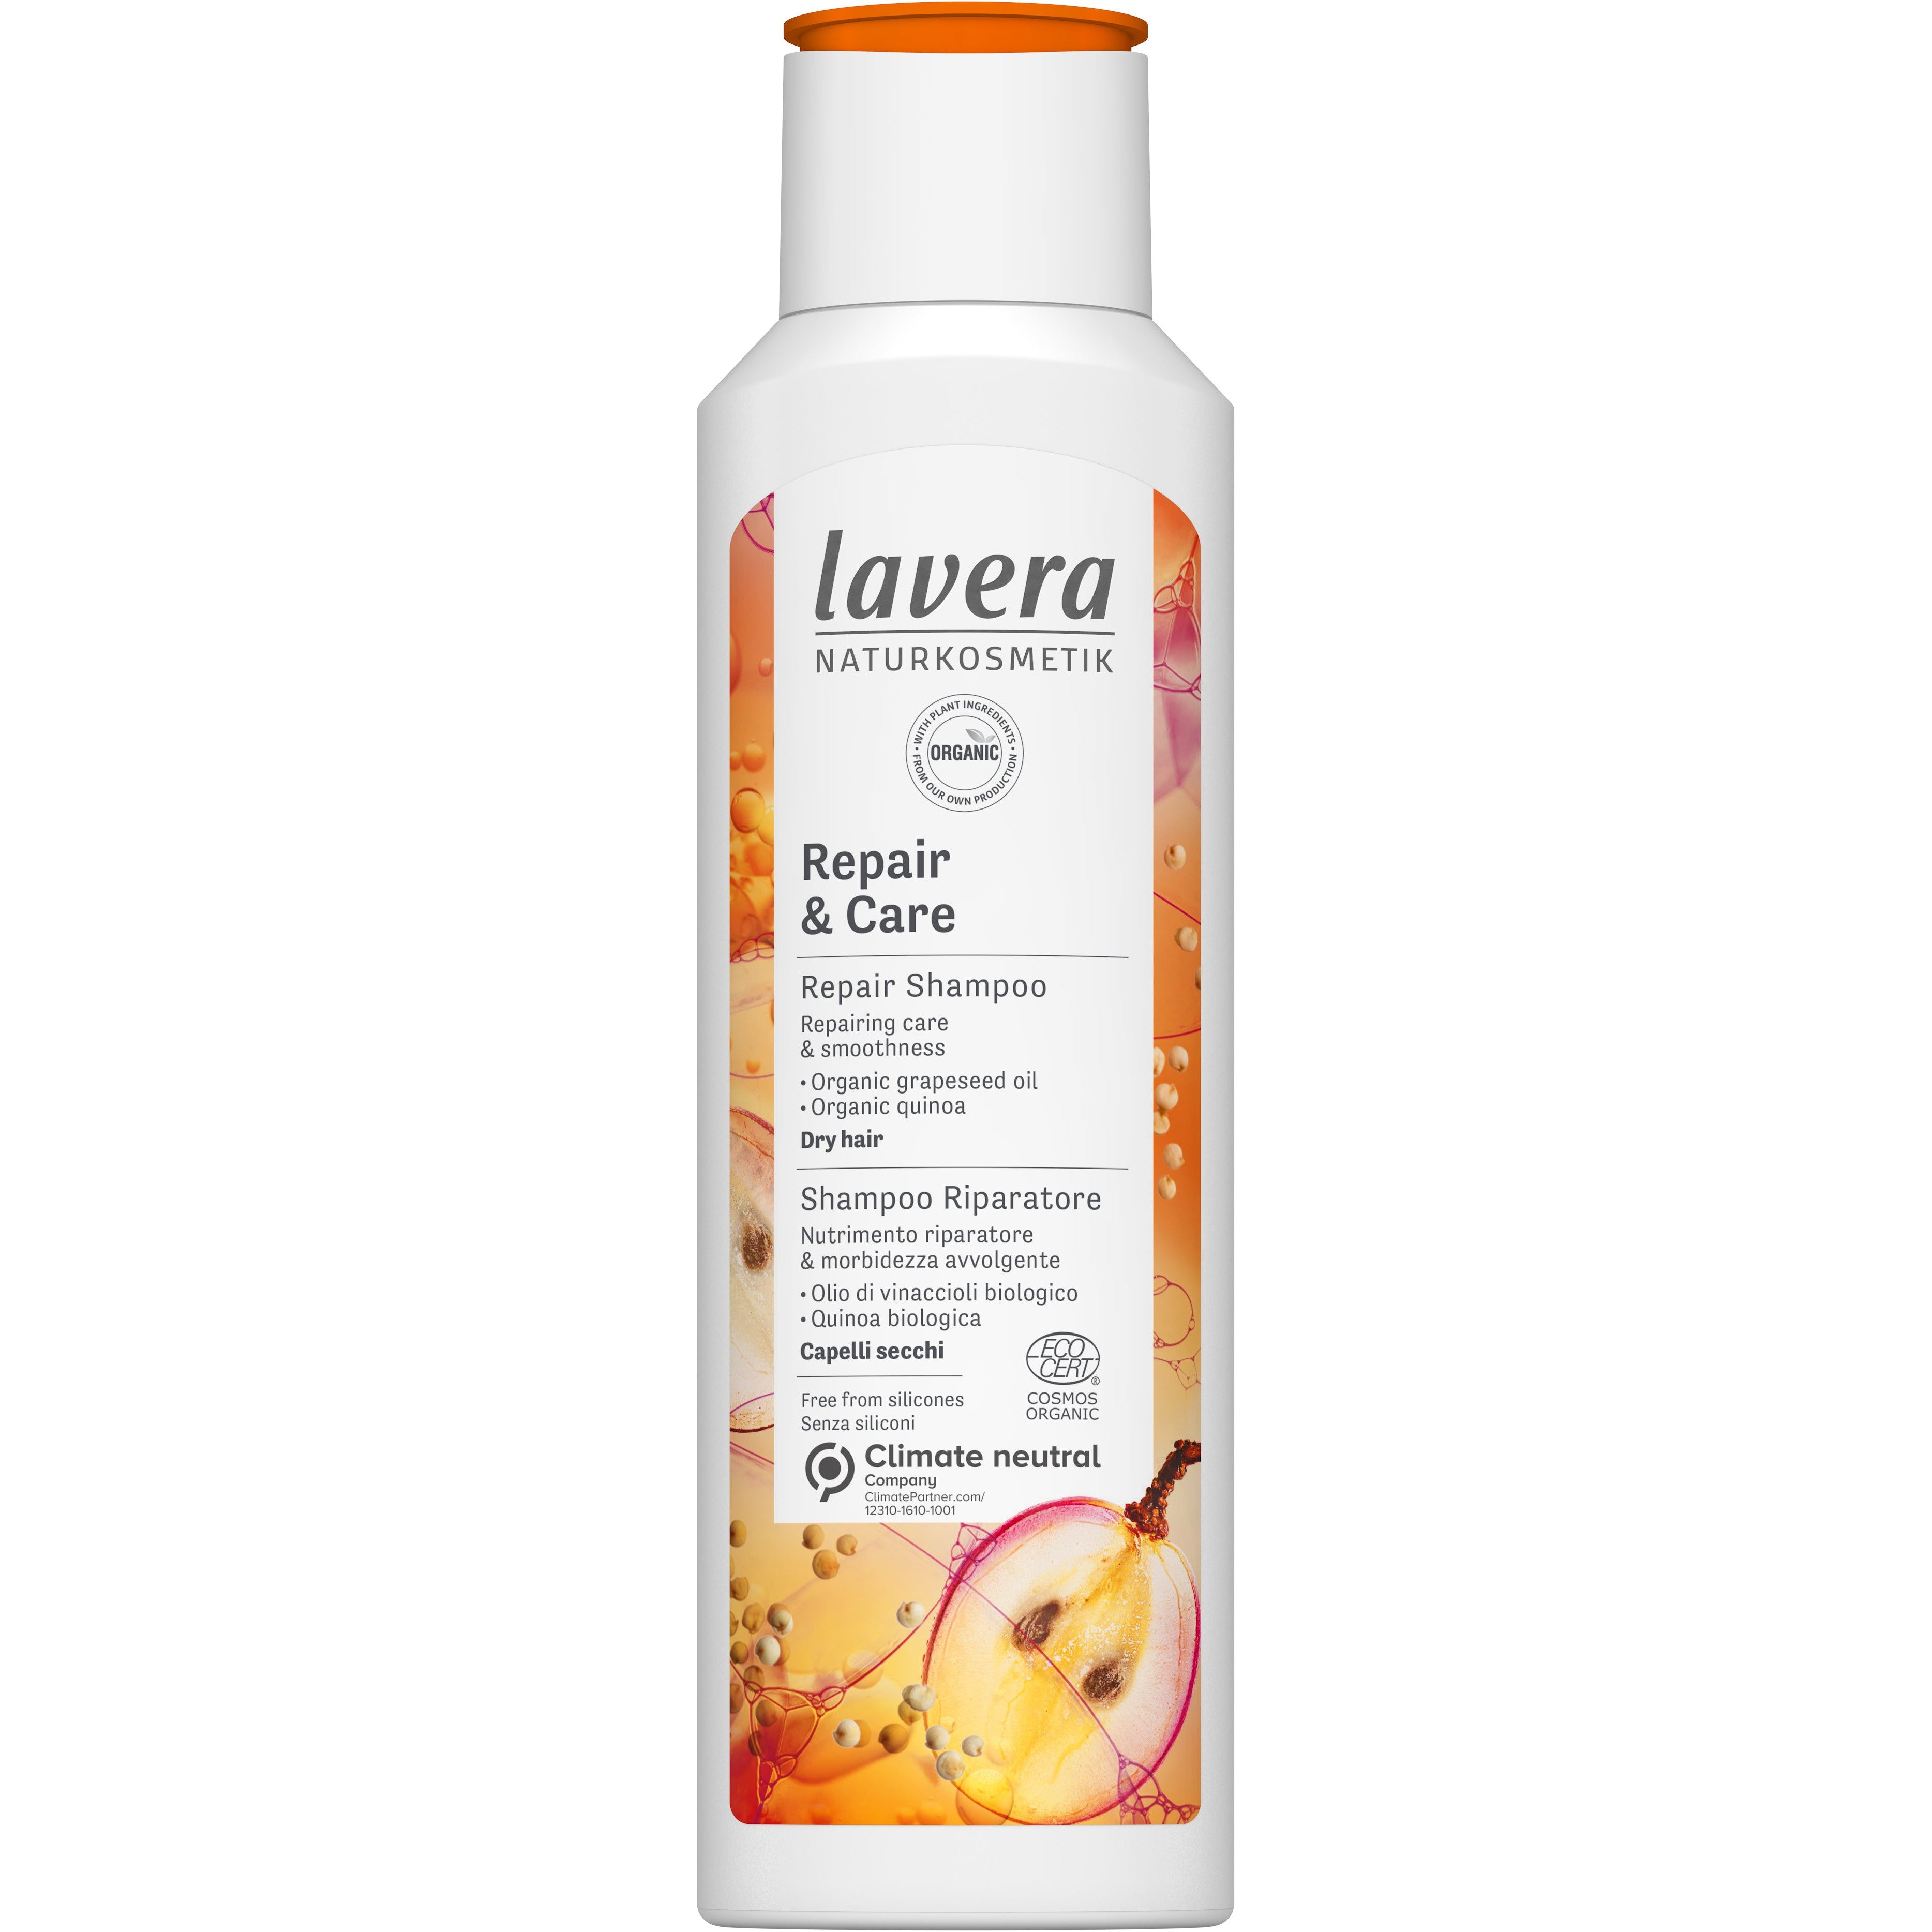 Lavera Repair & Care shampoo